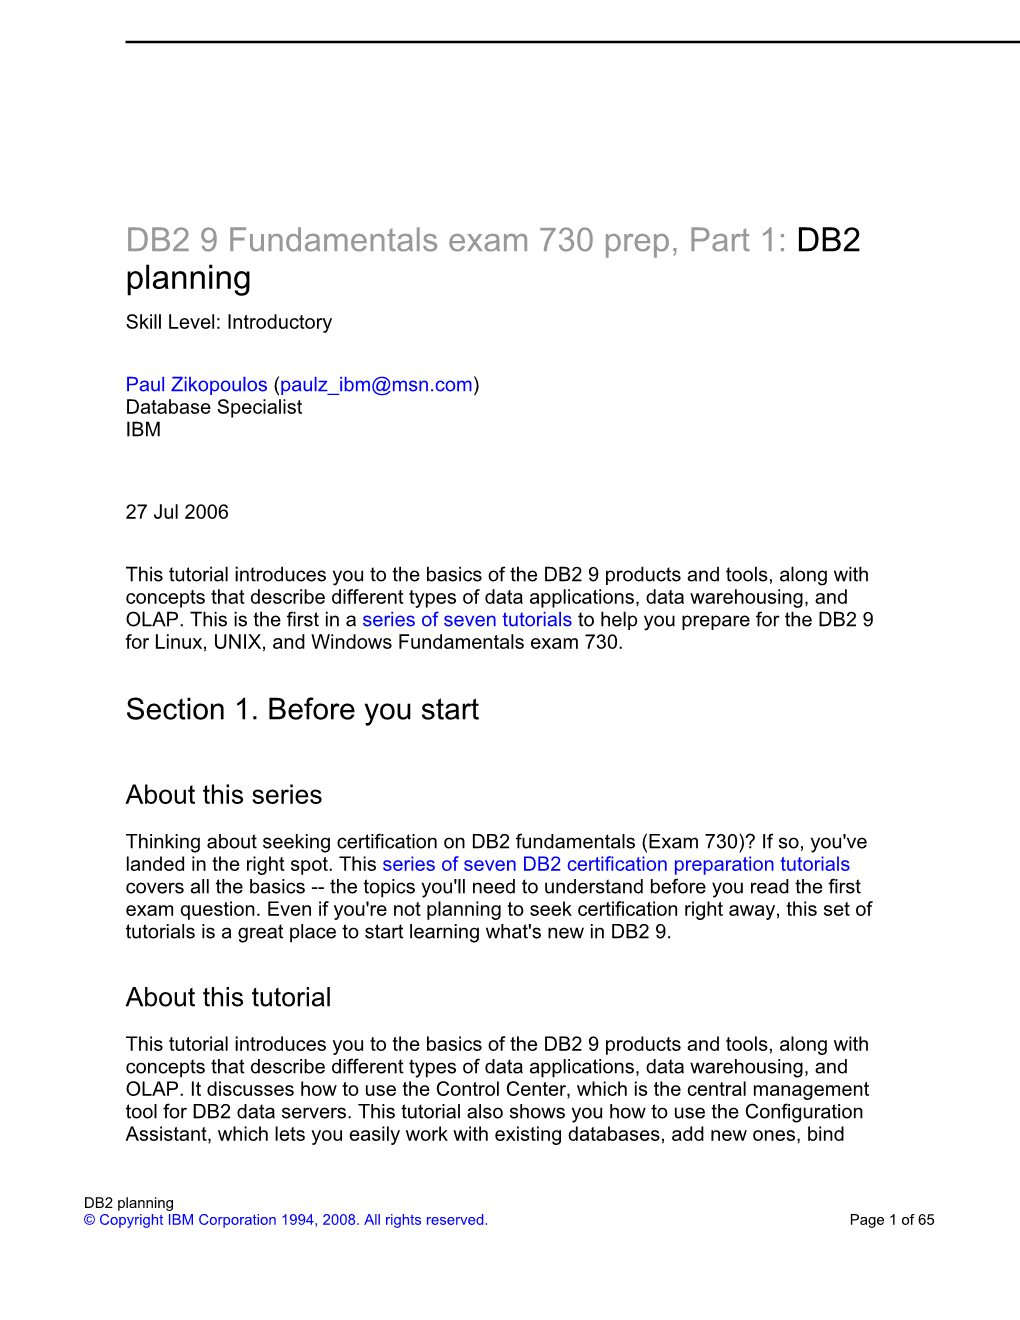 DB2 9 Fundamentals Exam 730 Prep, Part 1: DB2 Planning Skill Level: Introductory